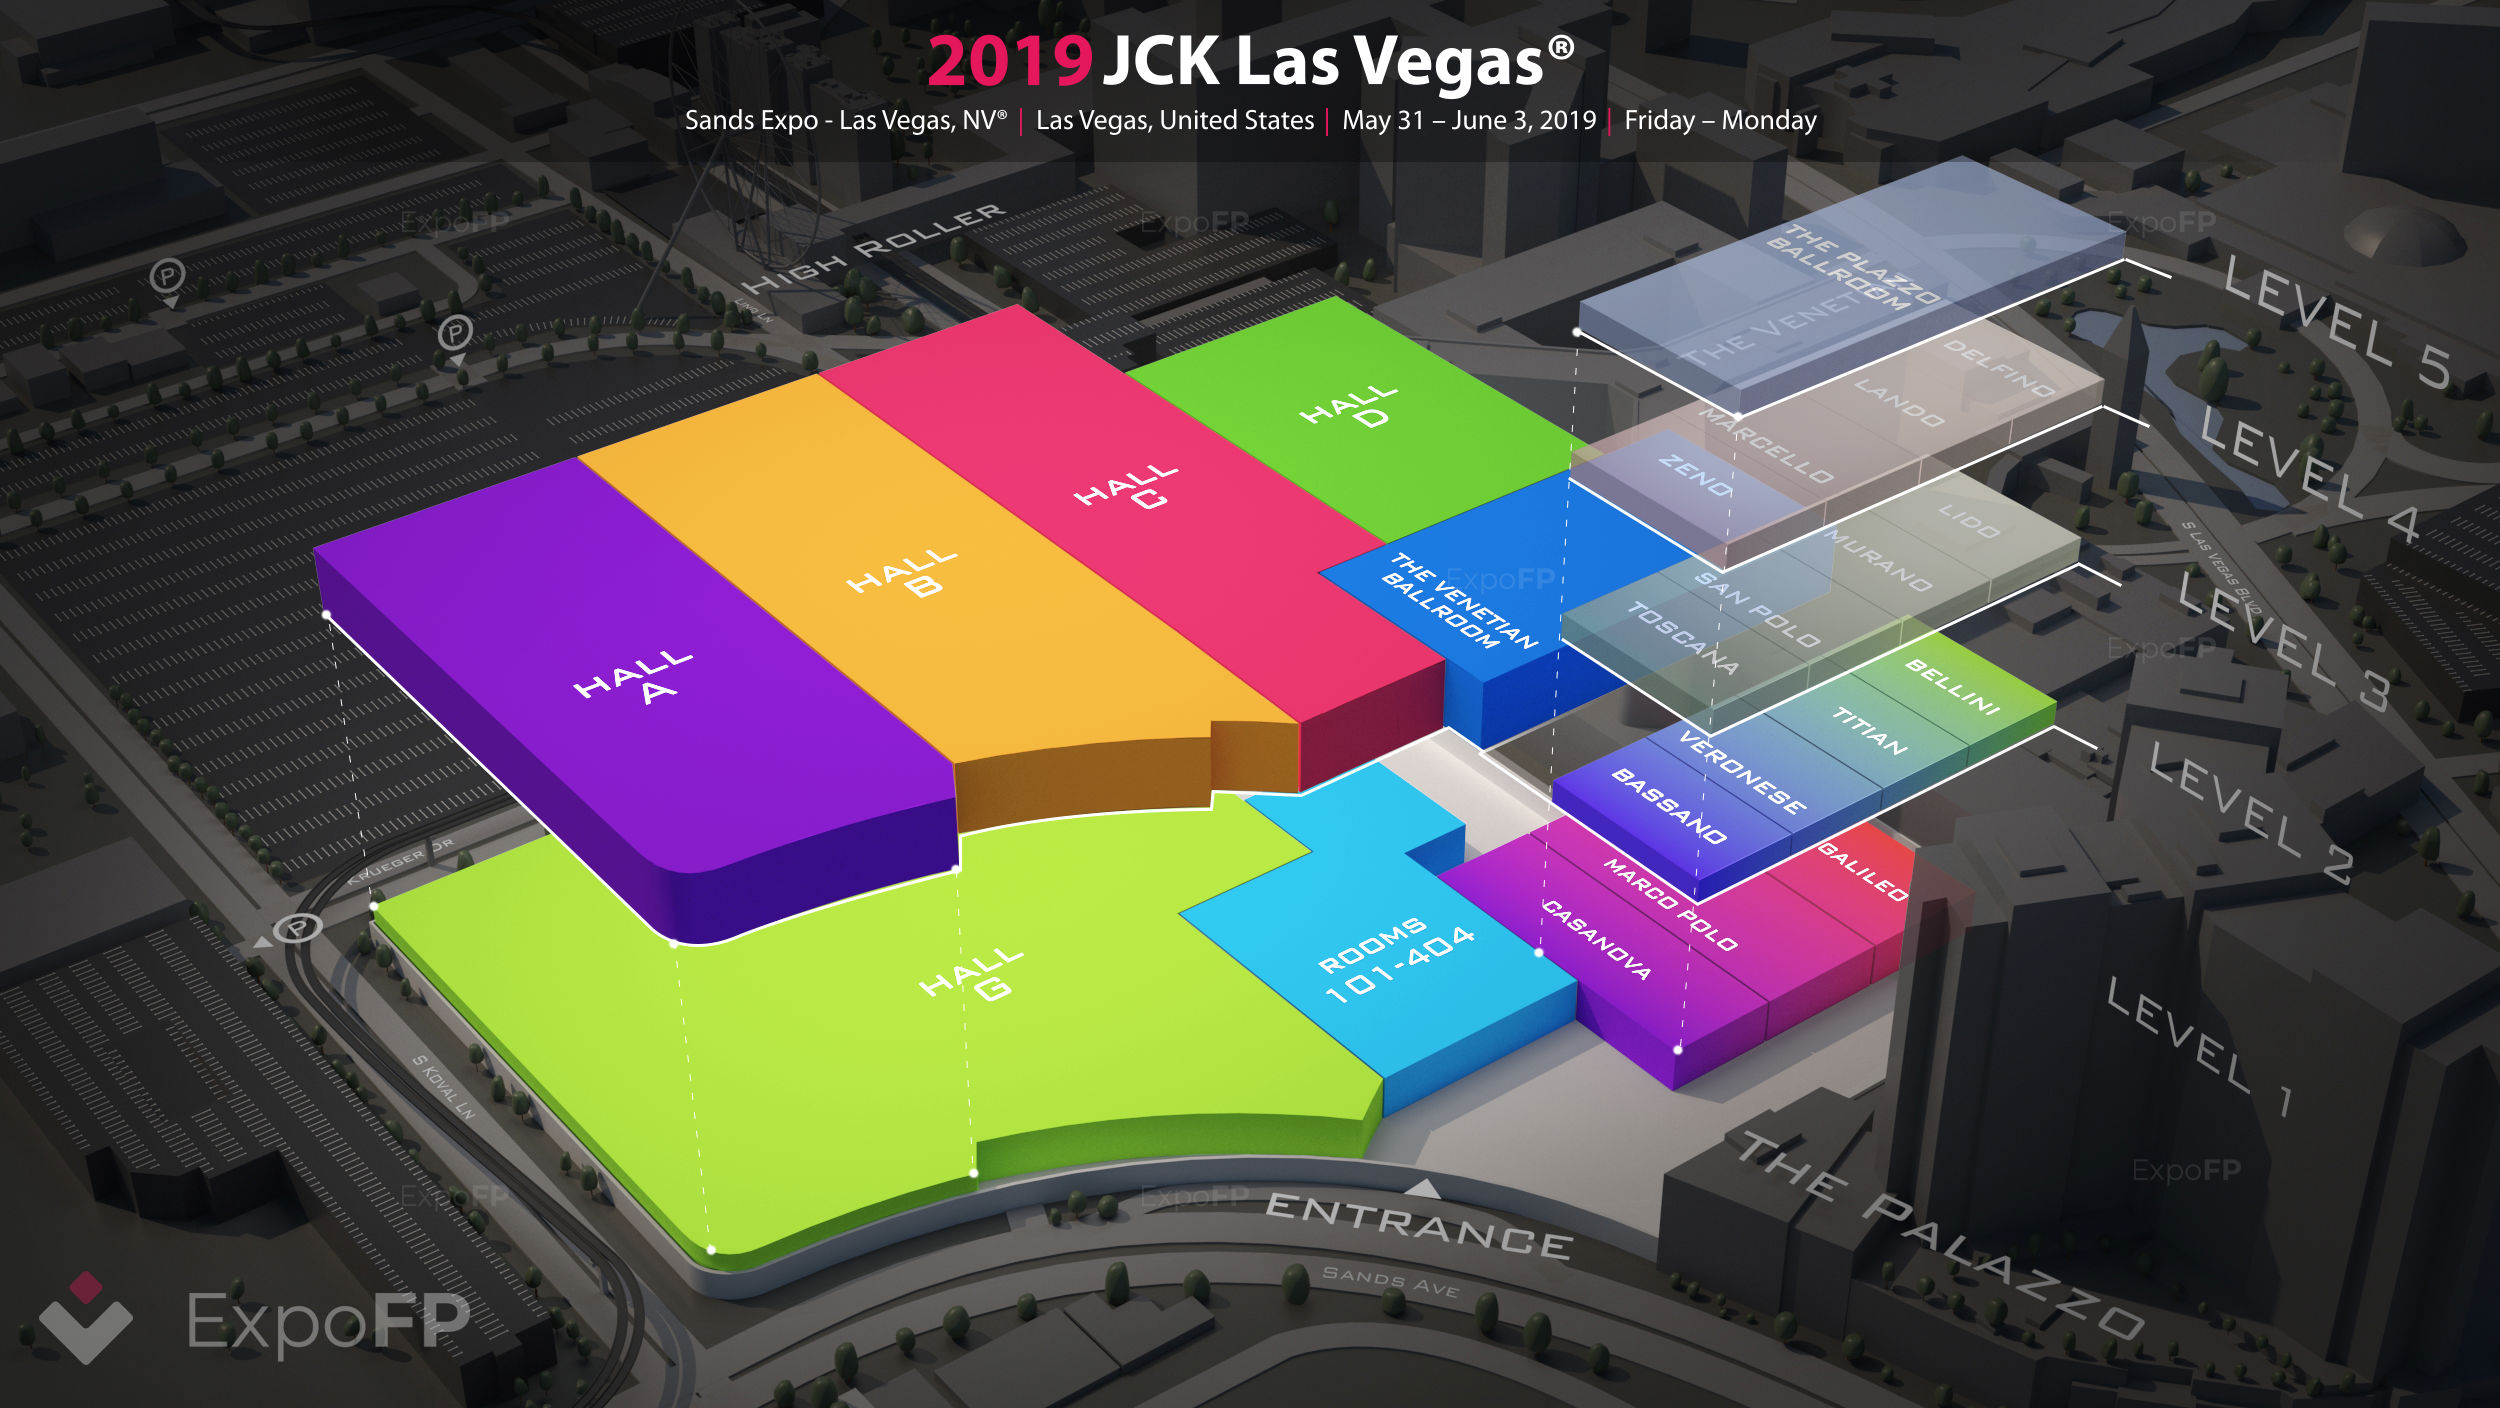 JCK Las Vegas 2019 in Sands Expo Las Vegas, NV